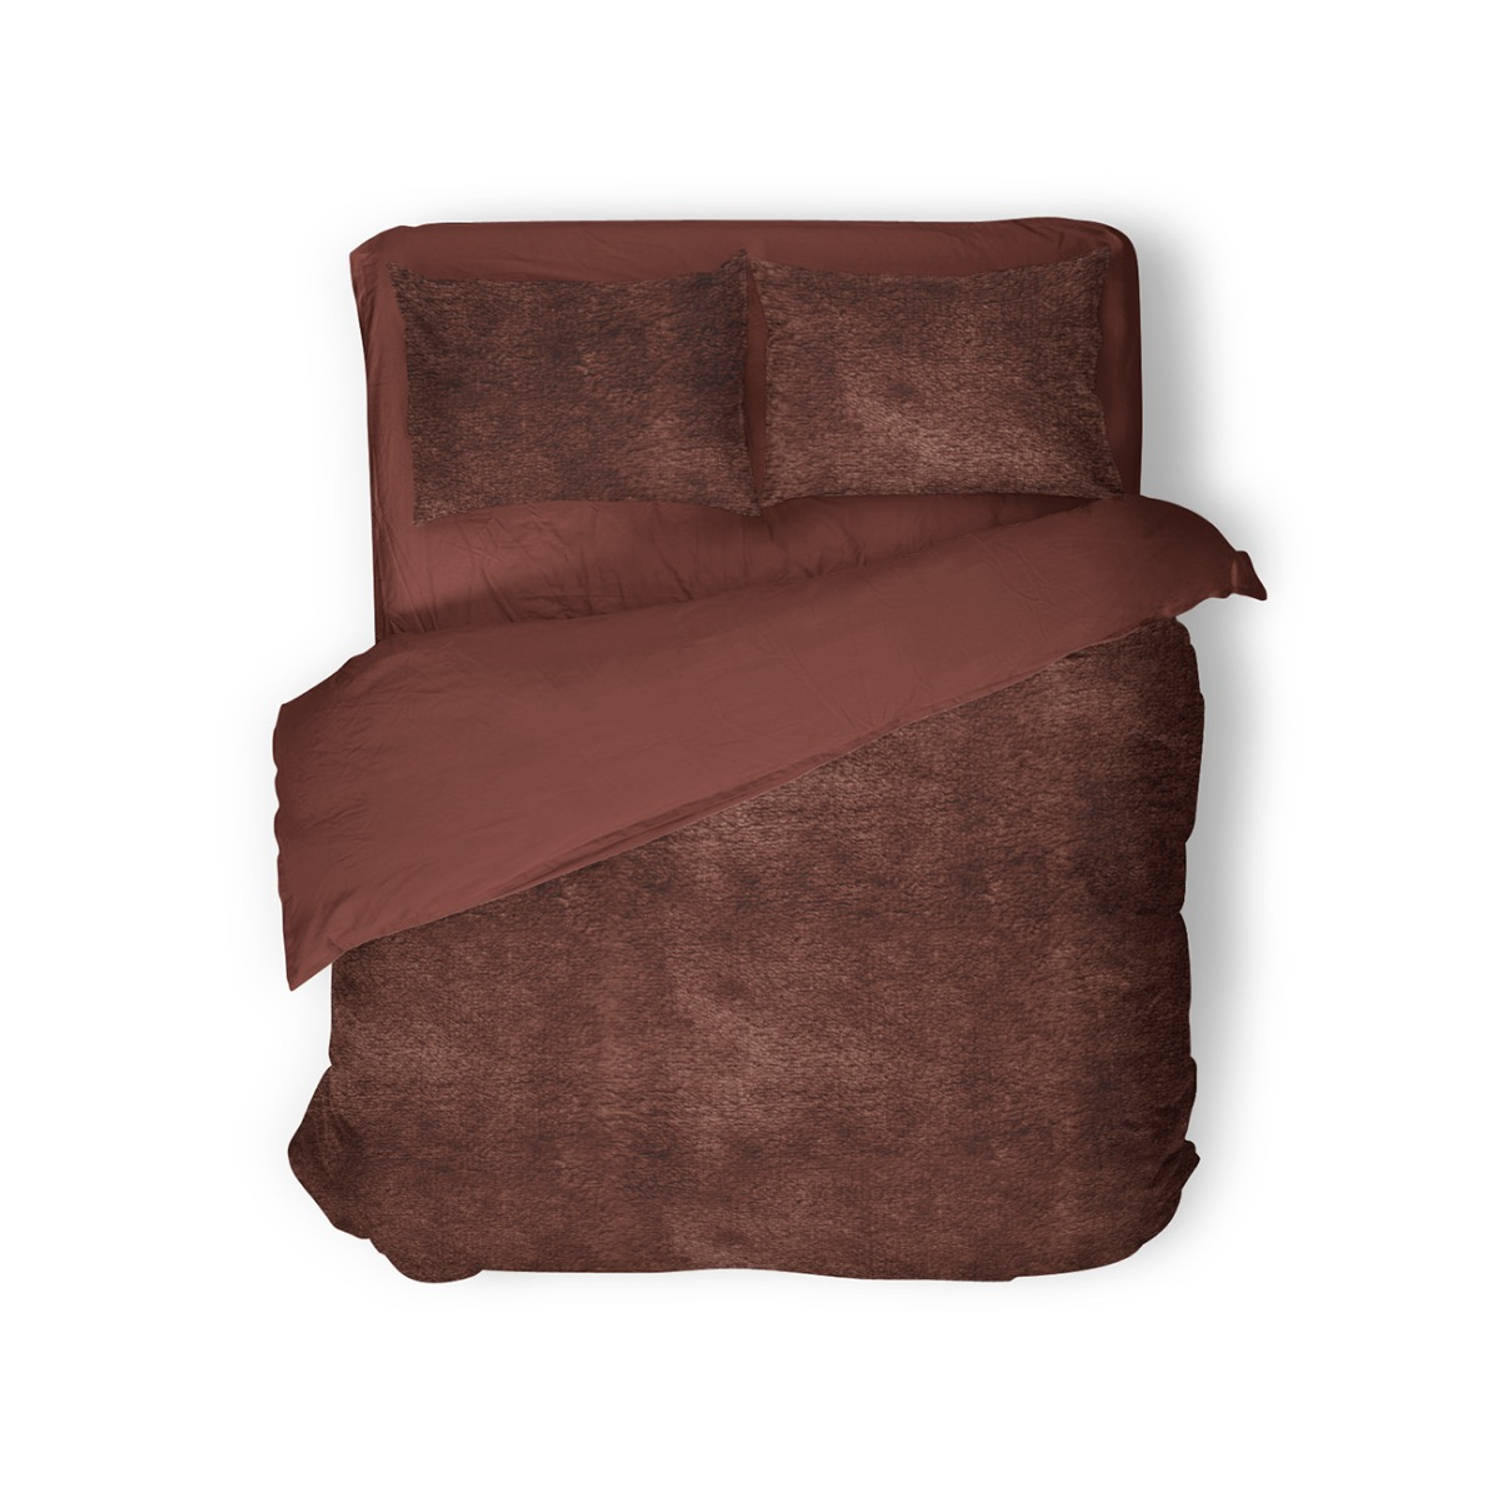 Eleganzzz Dekbedovertrek Flanel Fleece roze bruin 200x200-220cm